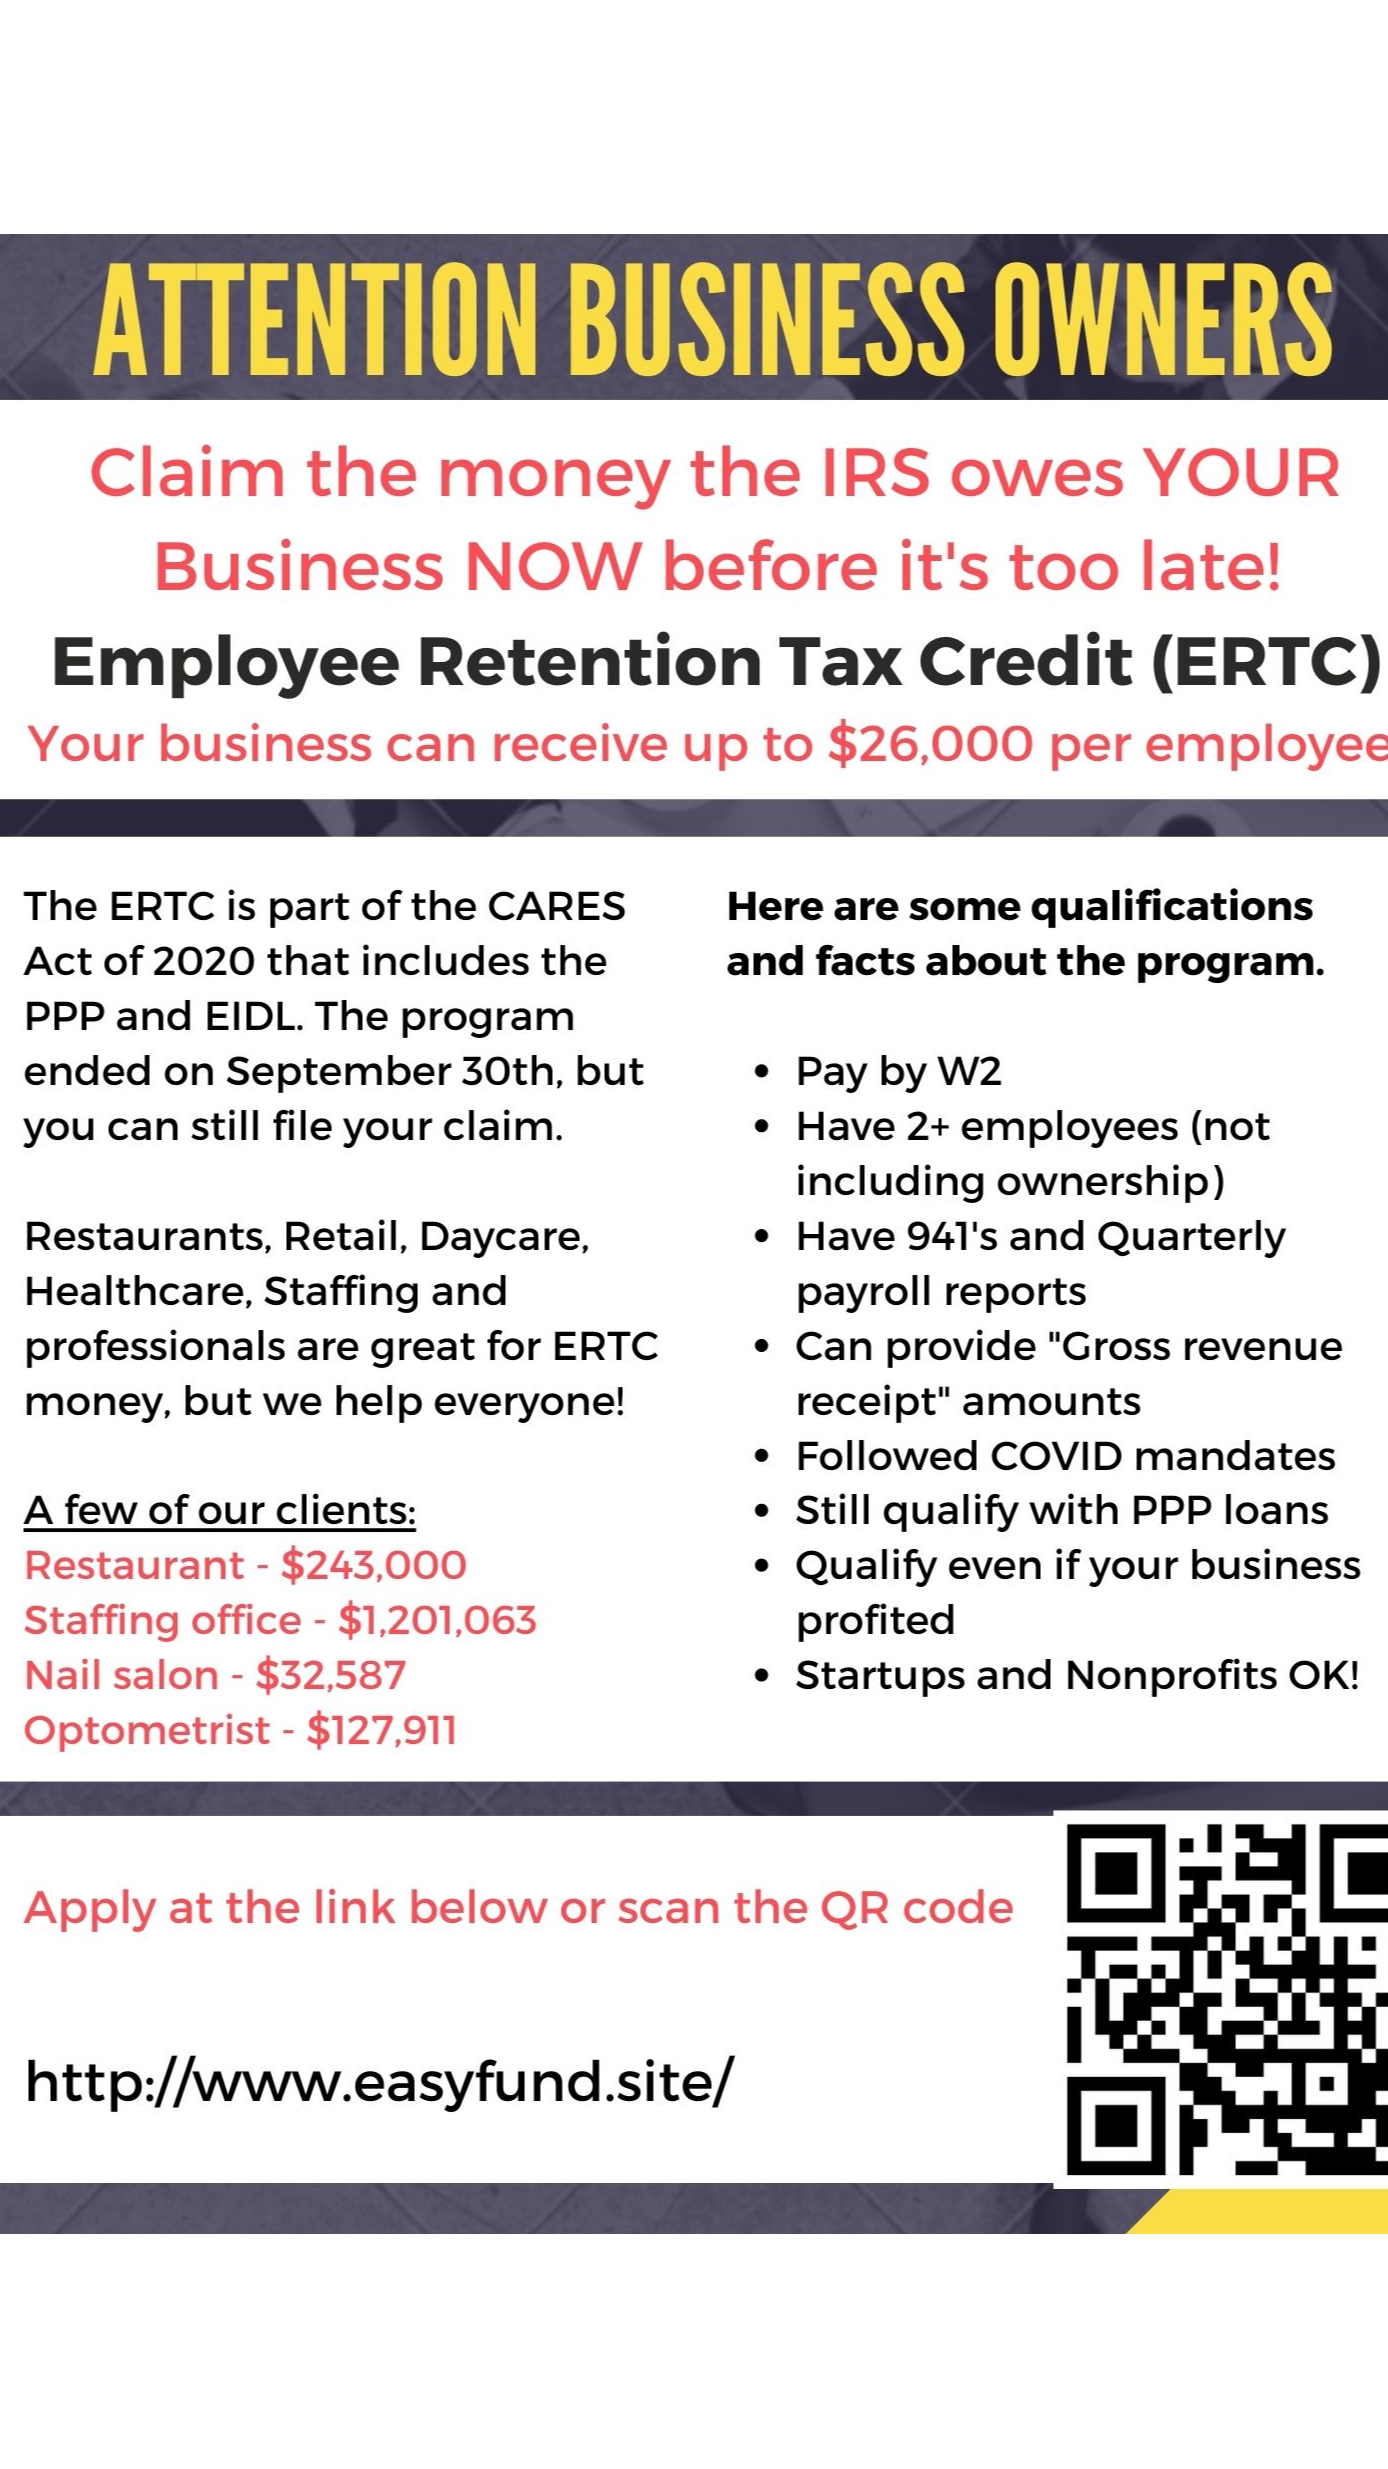 Free ERTC Rebate Estimates & Fast Tax Credit Application For SMBs & Non-Profits